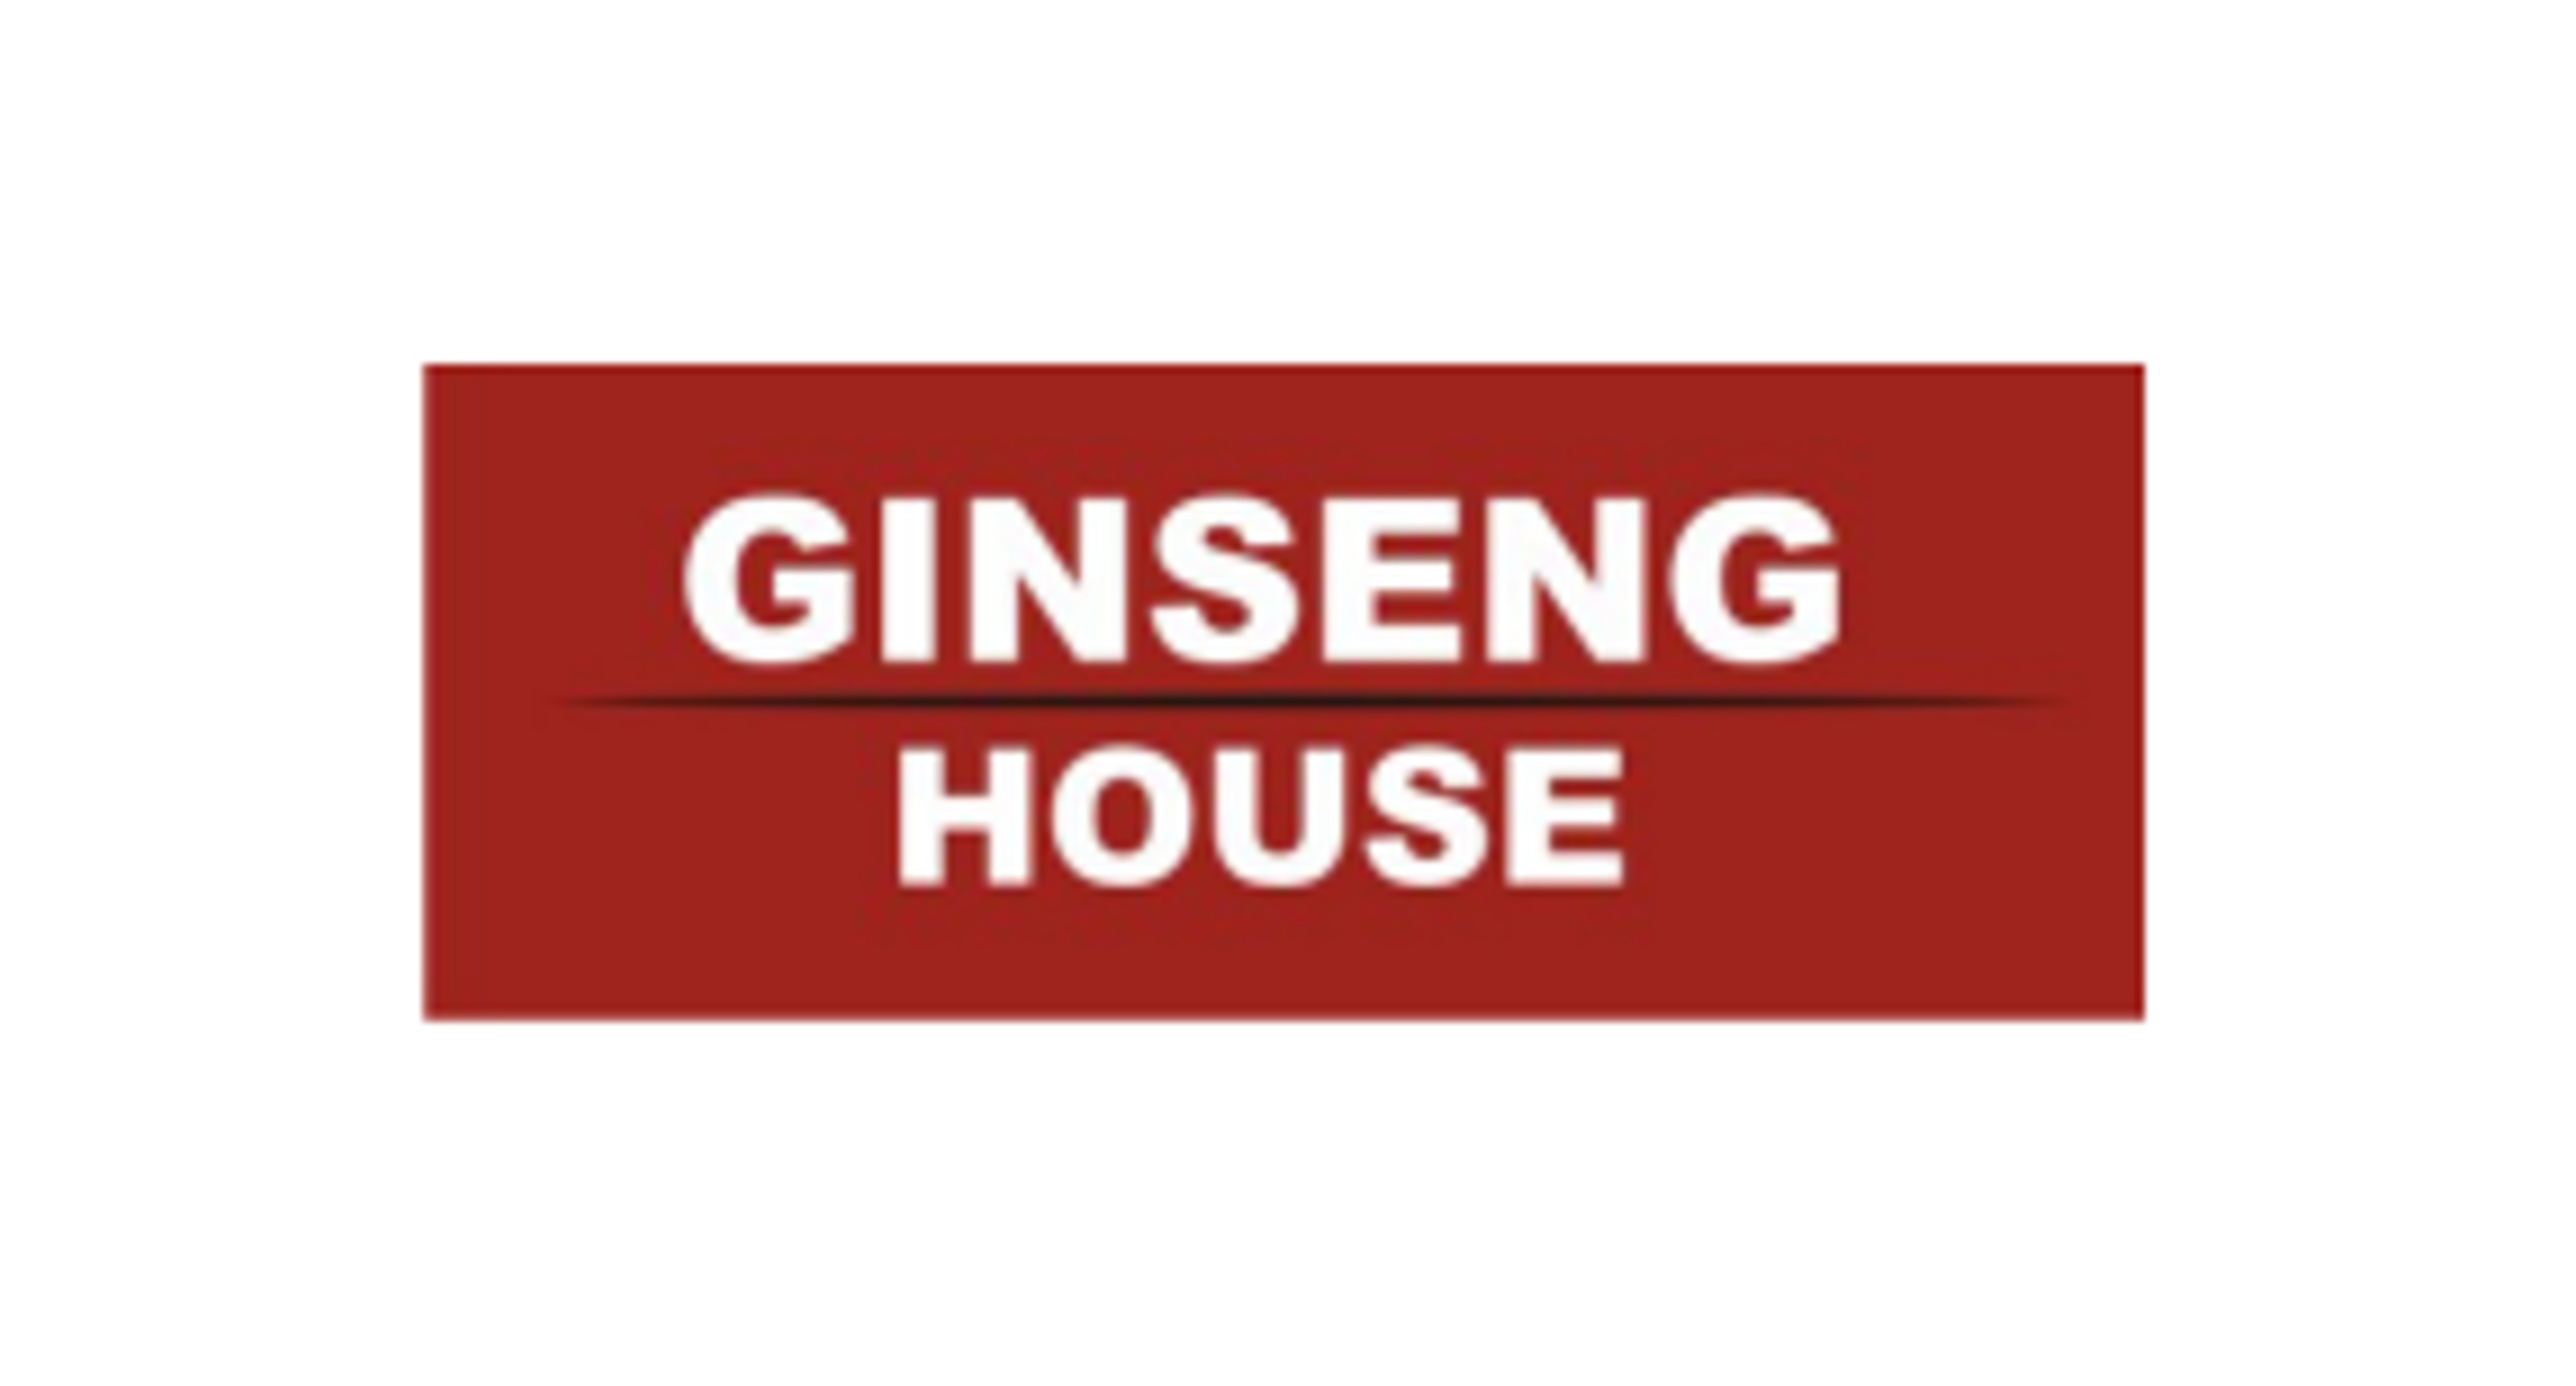 GINSENG HOUSE